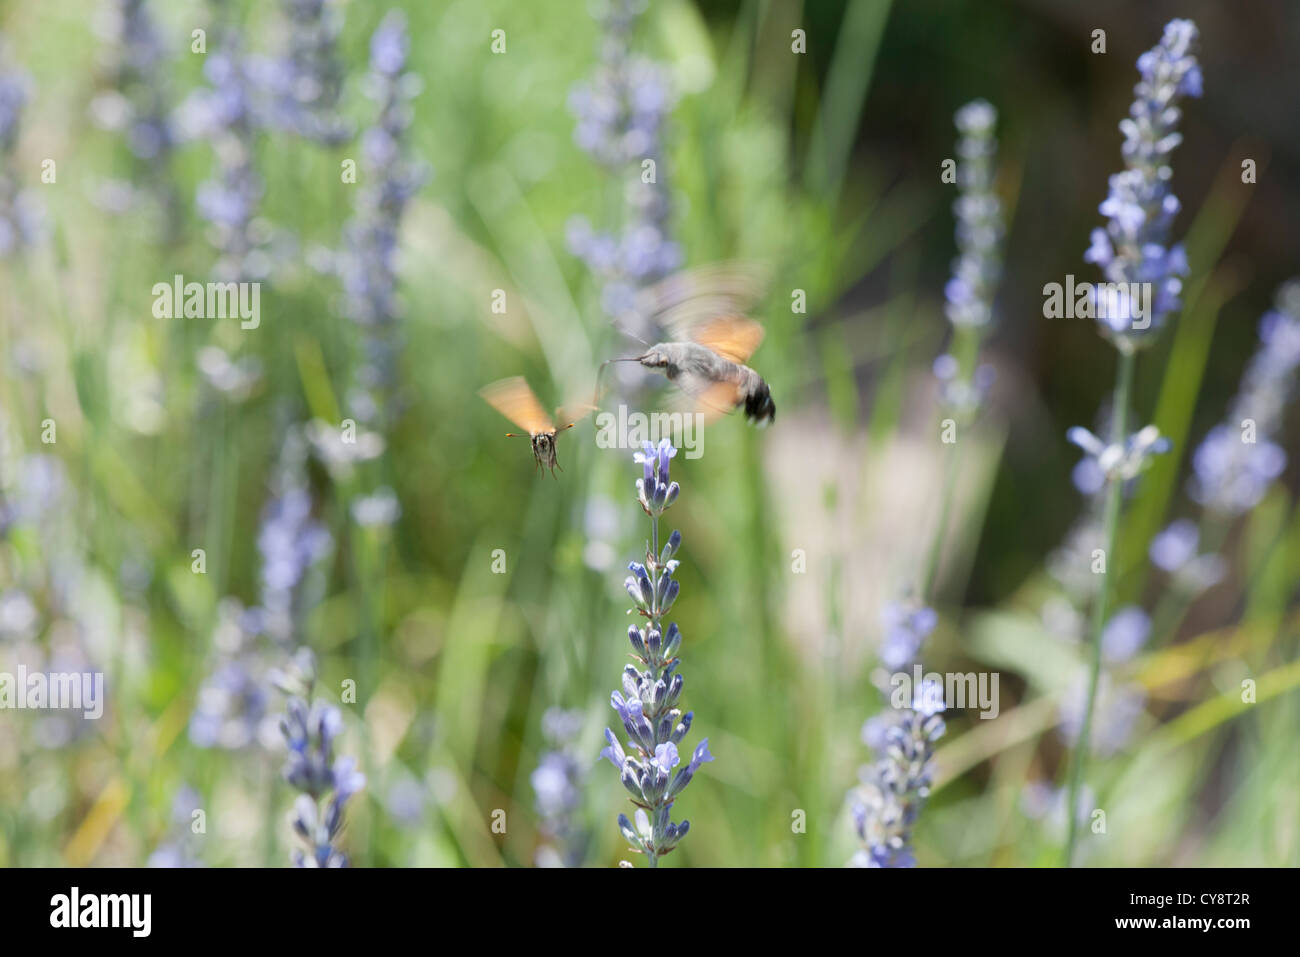 Sphingidae flying among flowers Stock Photo